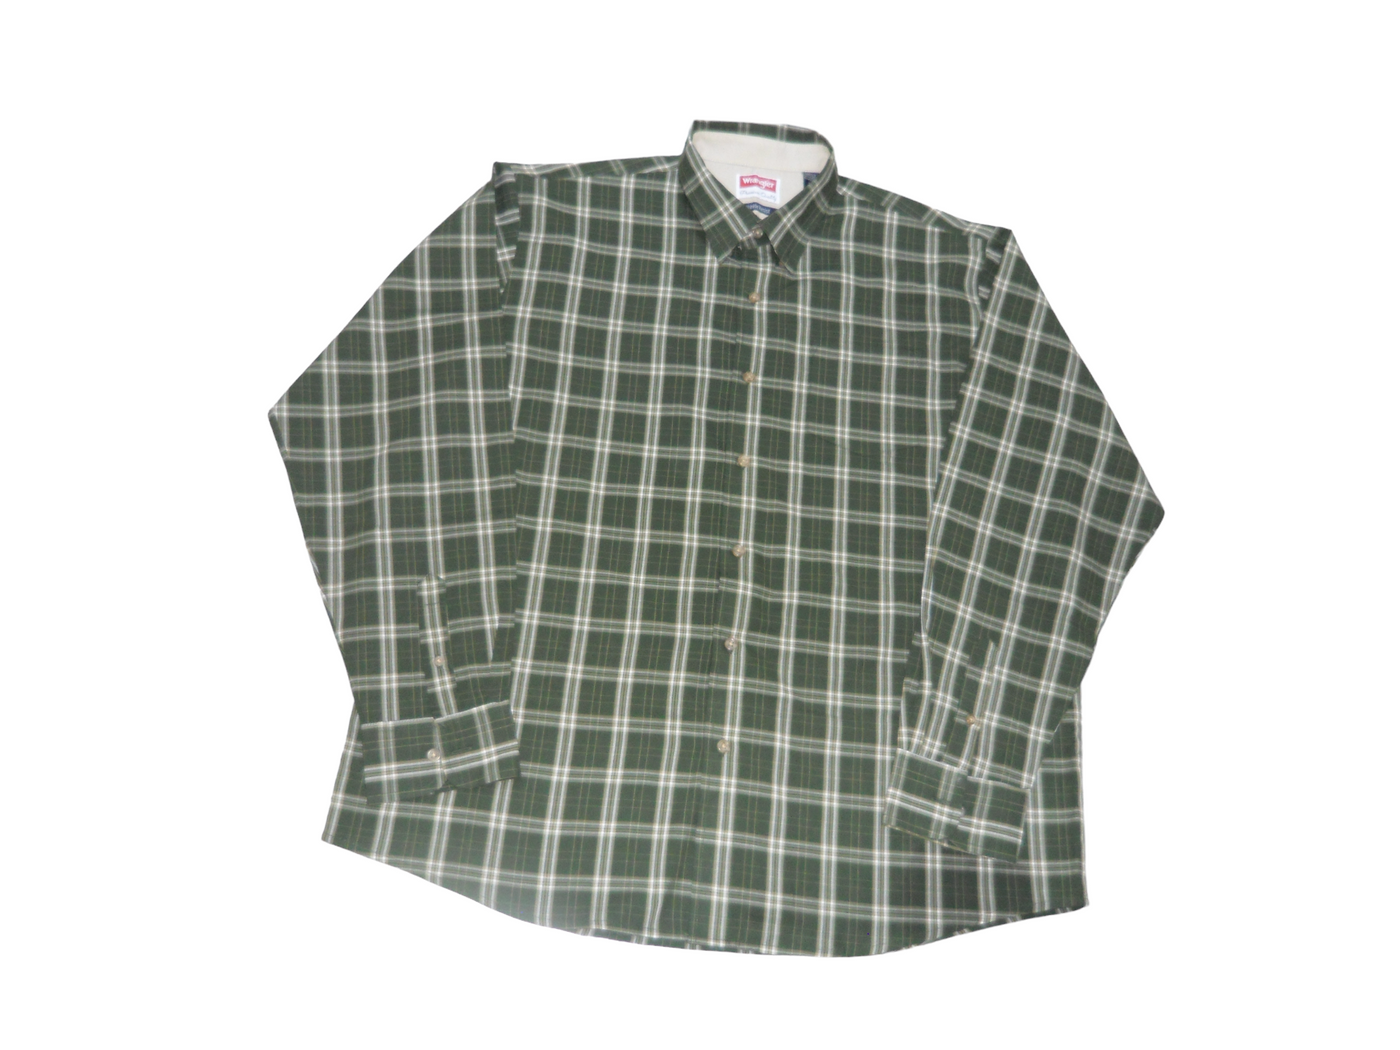 Vintage Wrangler Men's Wrinkle-Resistant Long Sleeve Shirt Olive Green Checked X-Large